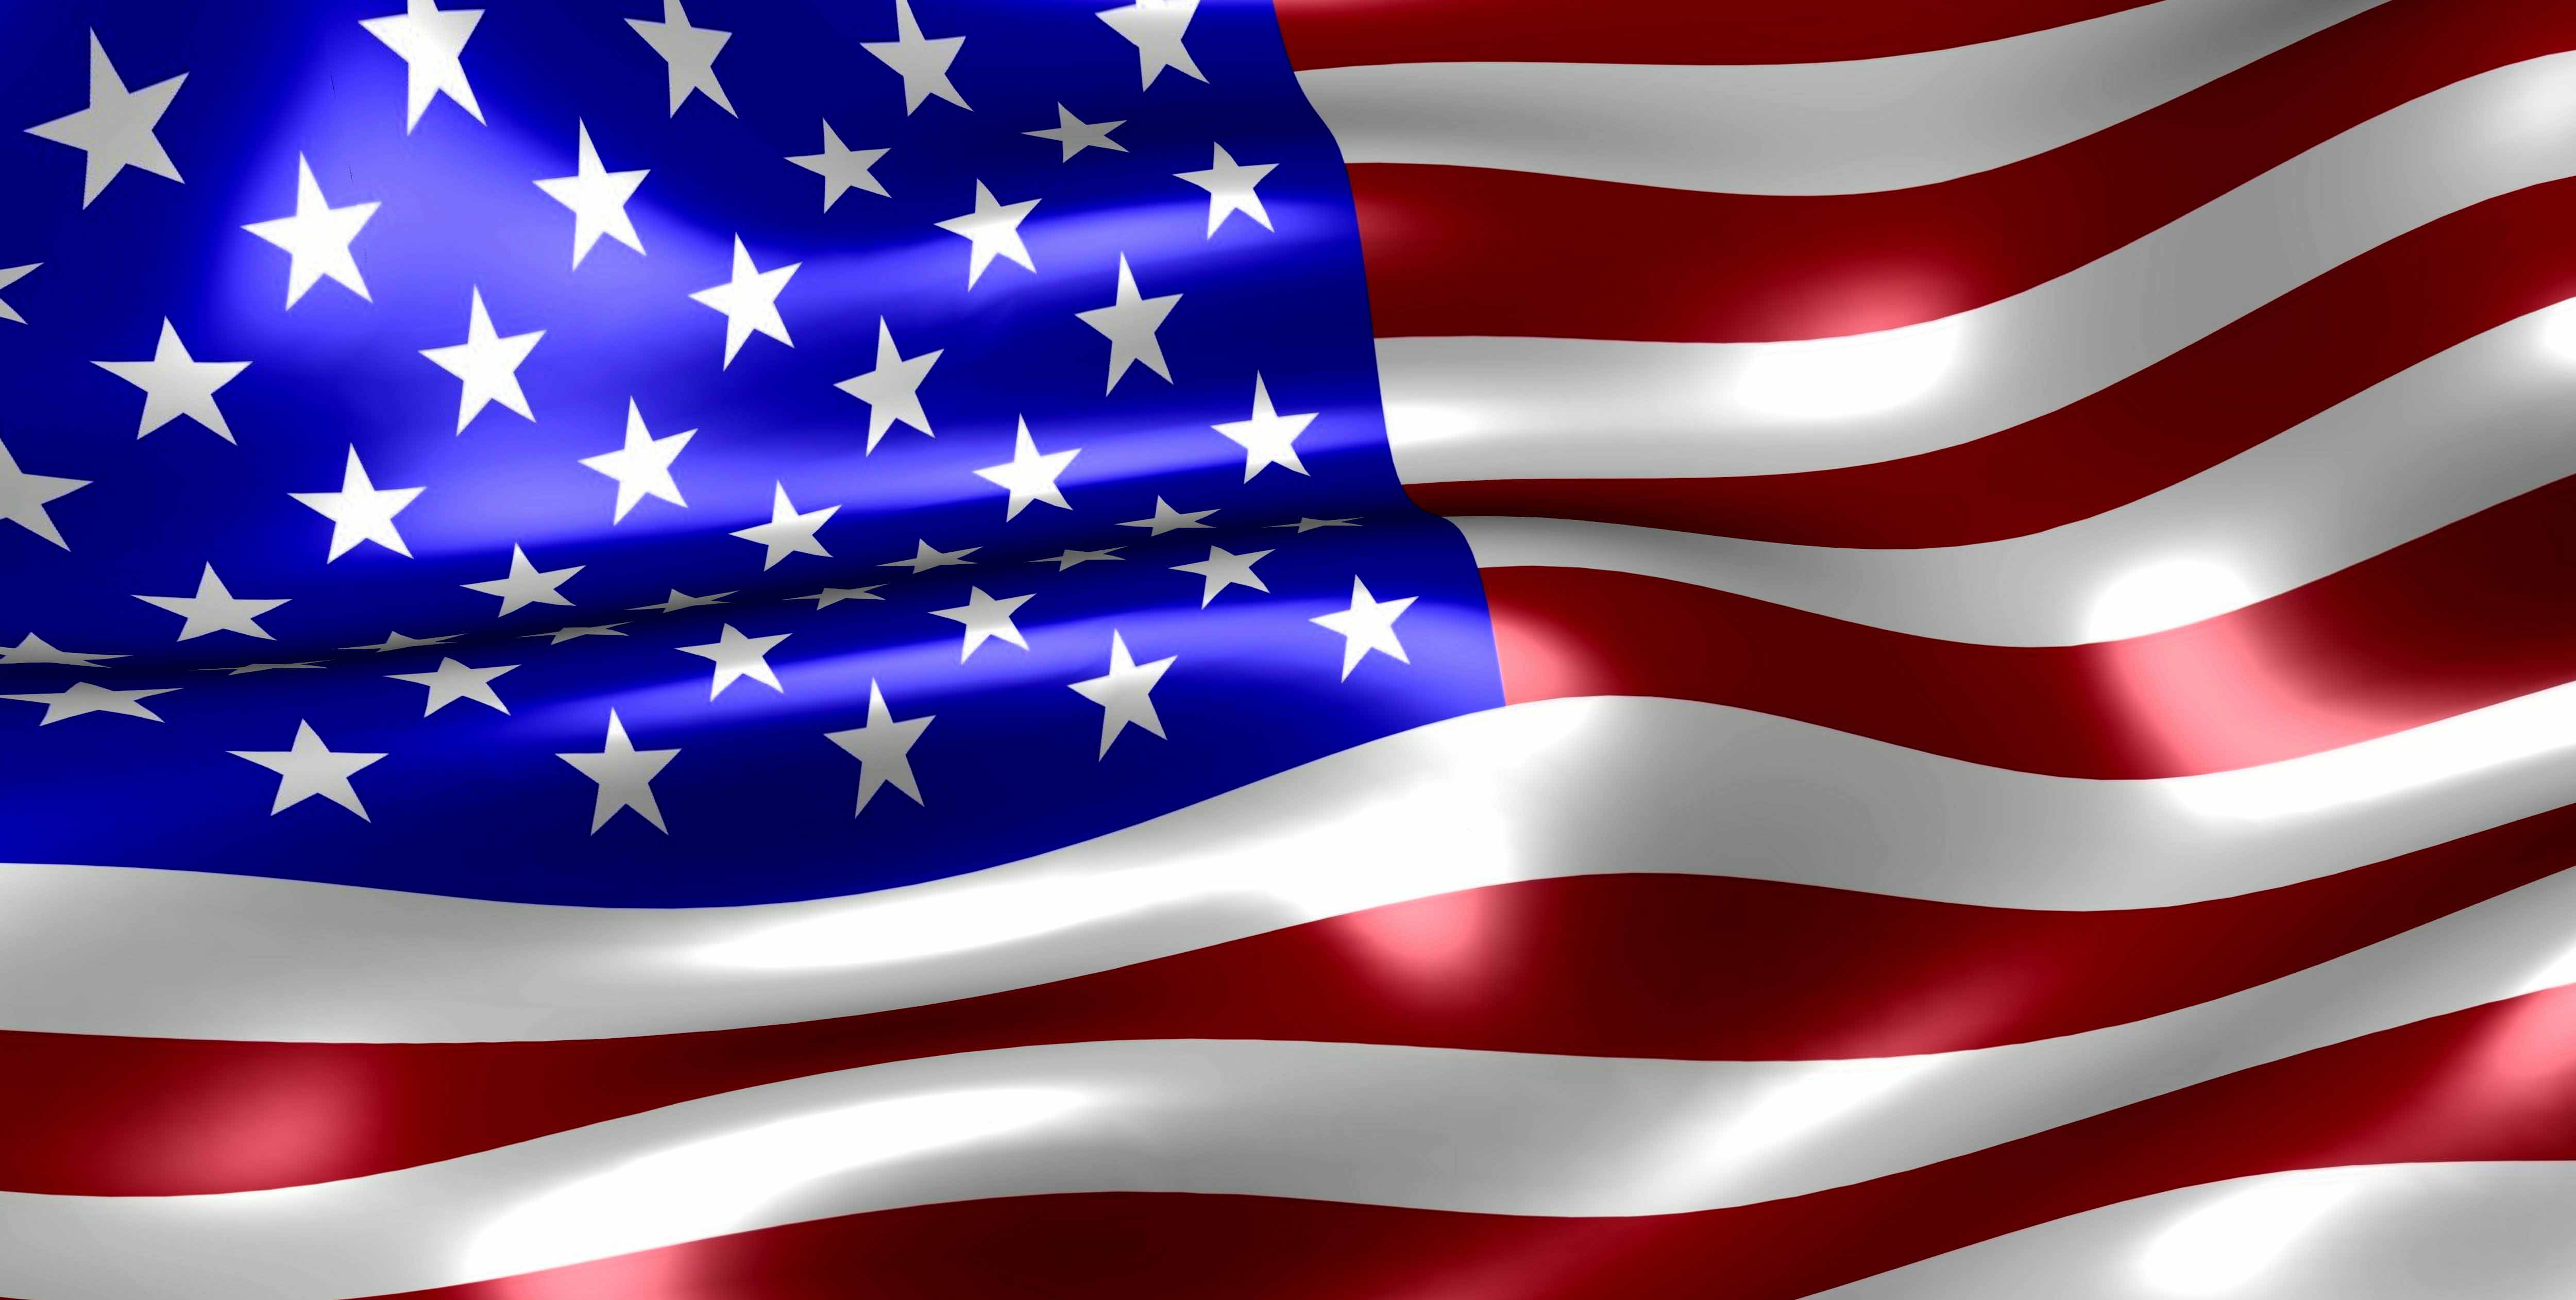 USA Flag Hd Wallpapers Download 5000x2523